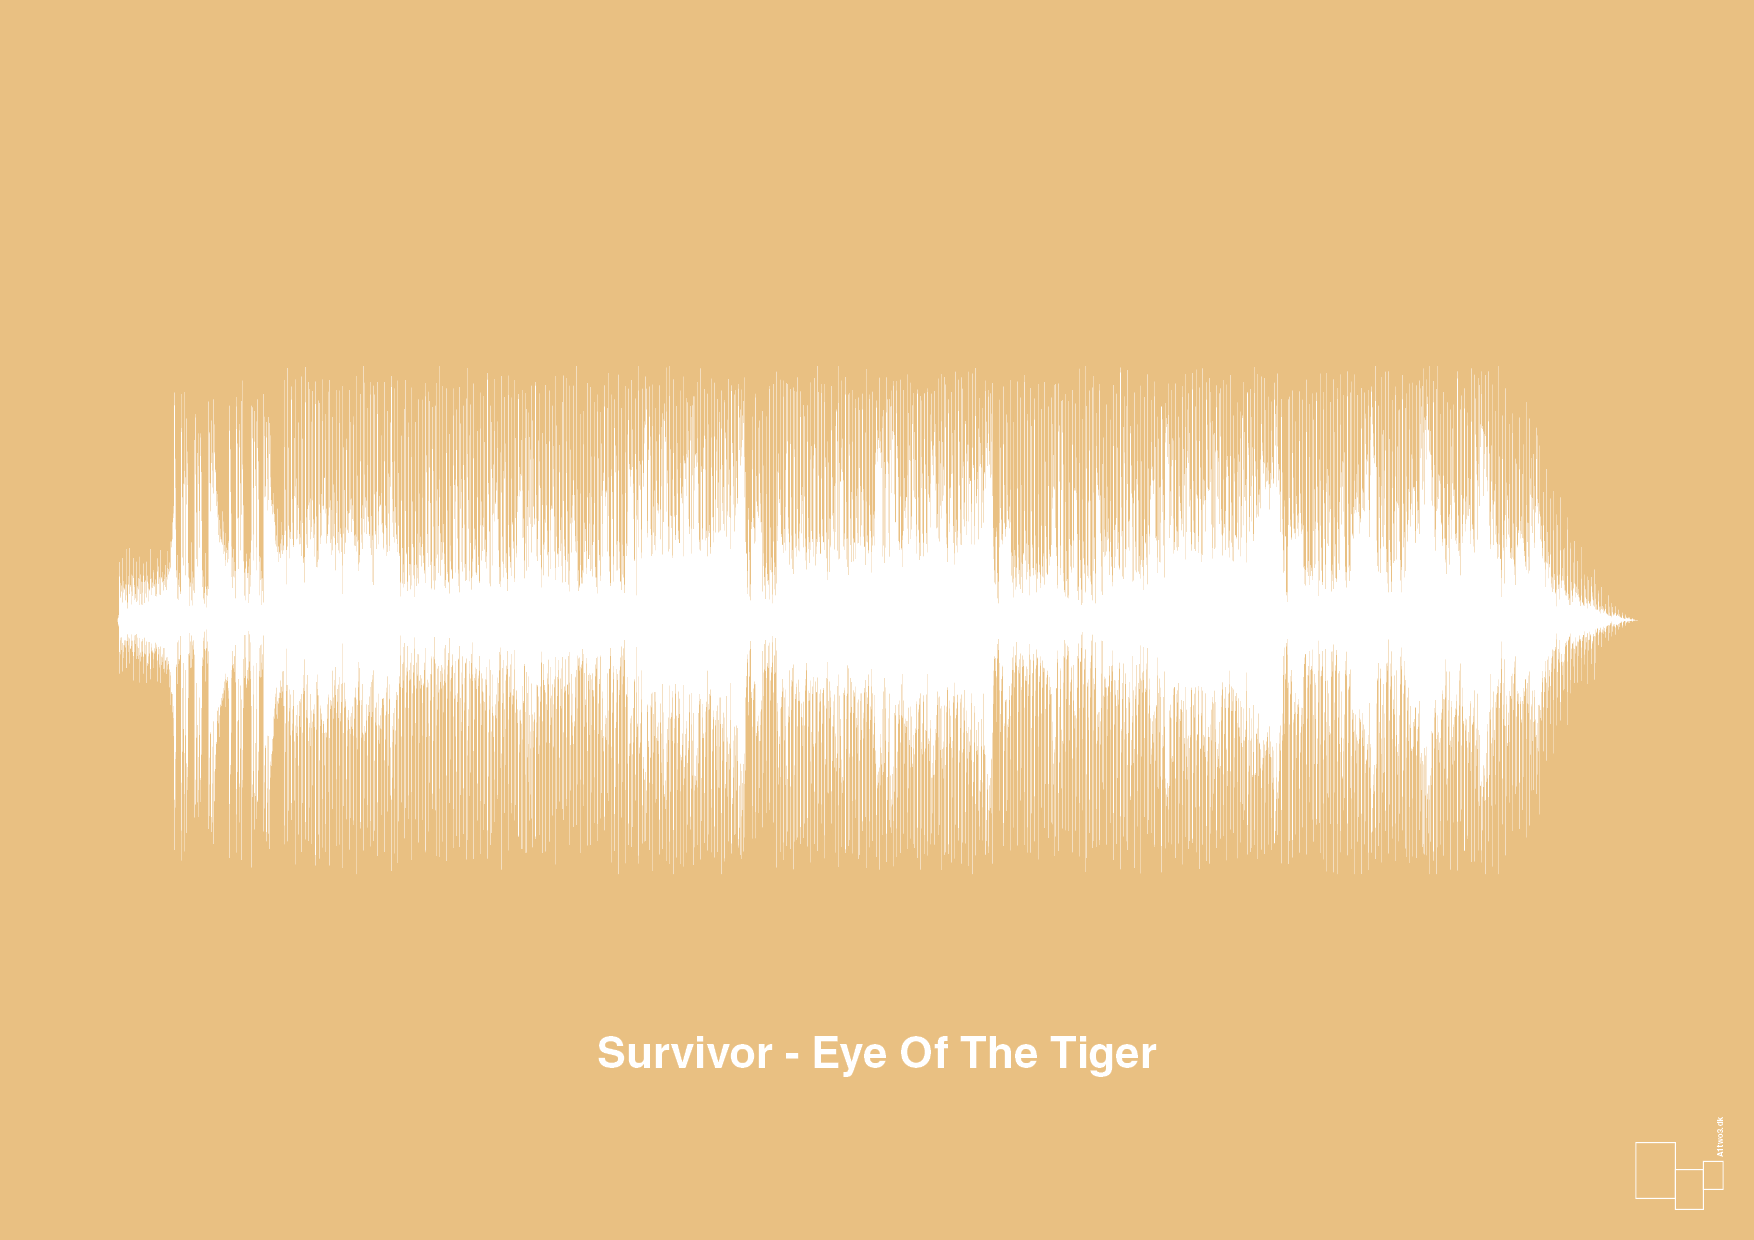 survivor - eye of the tiger - Plakat med Musik i Charismatic